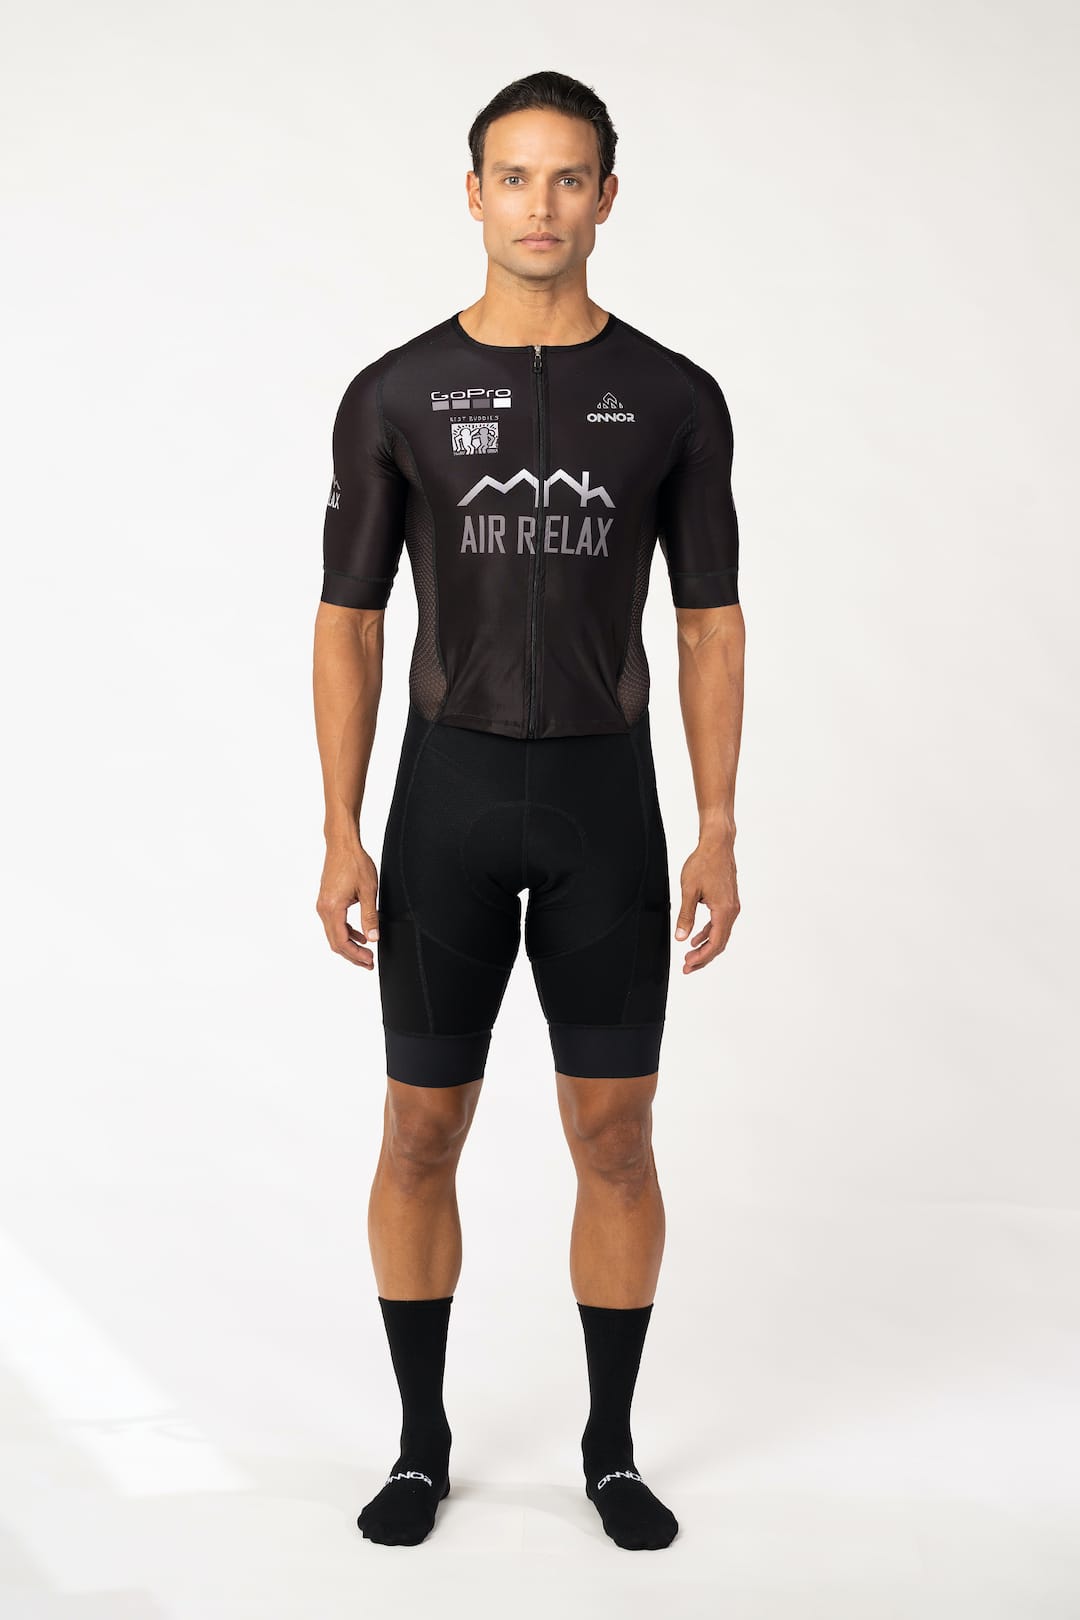 buy custom cycling jersey no minimum order customized cyclist jersey, custom cycling gear no minimum